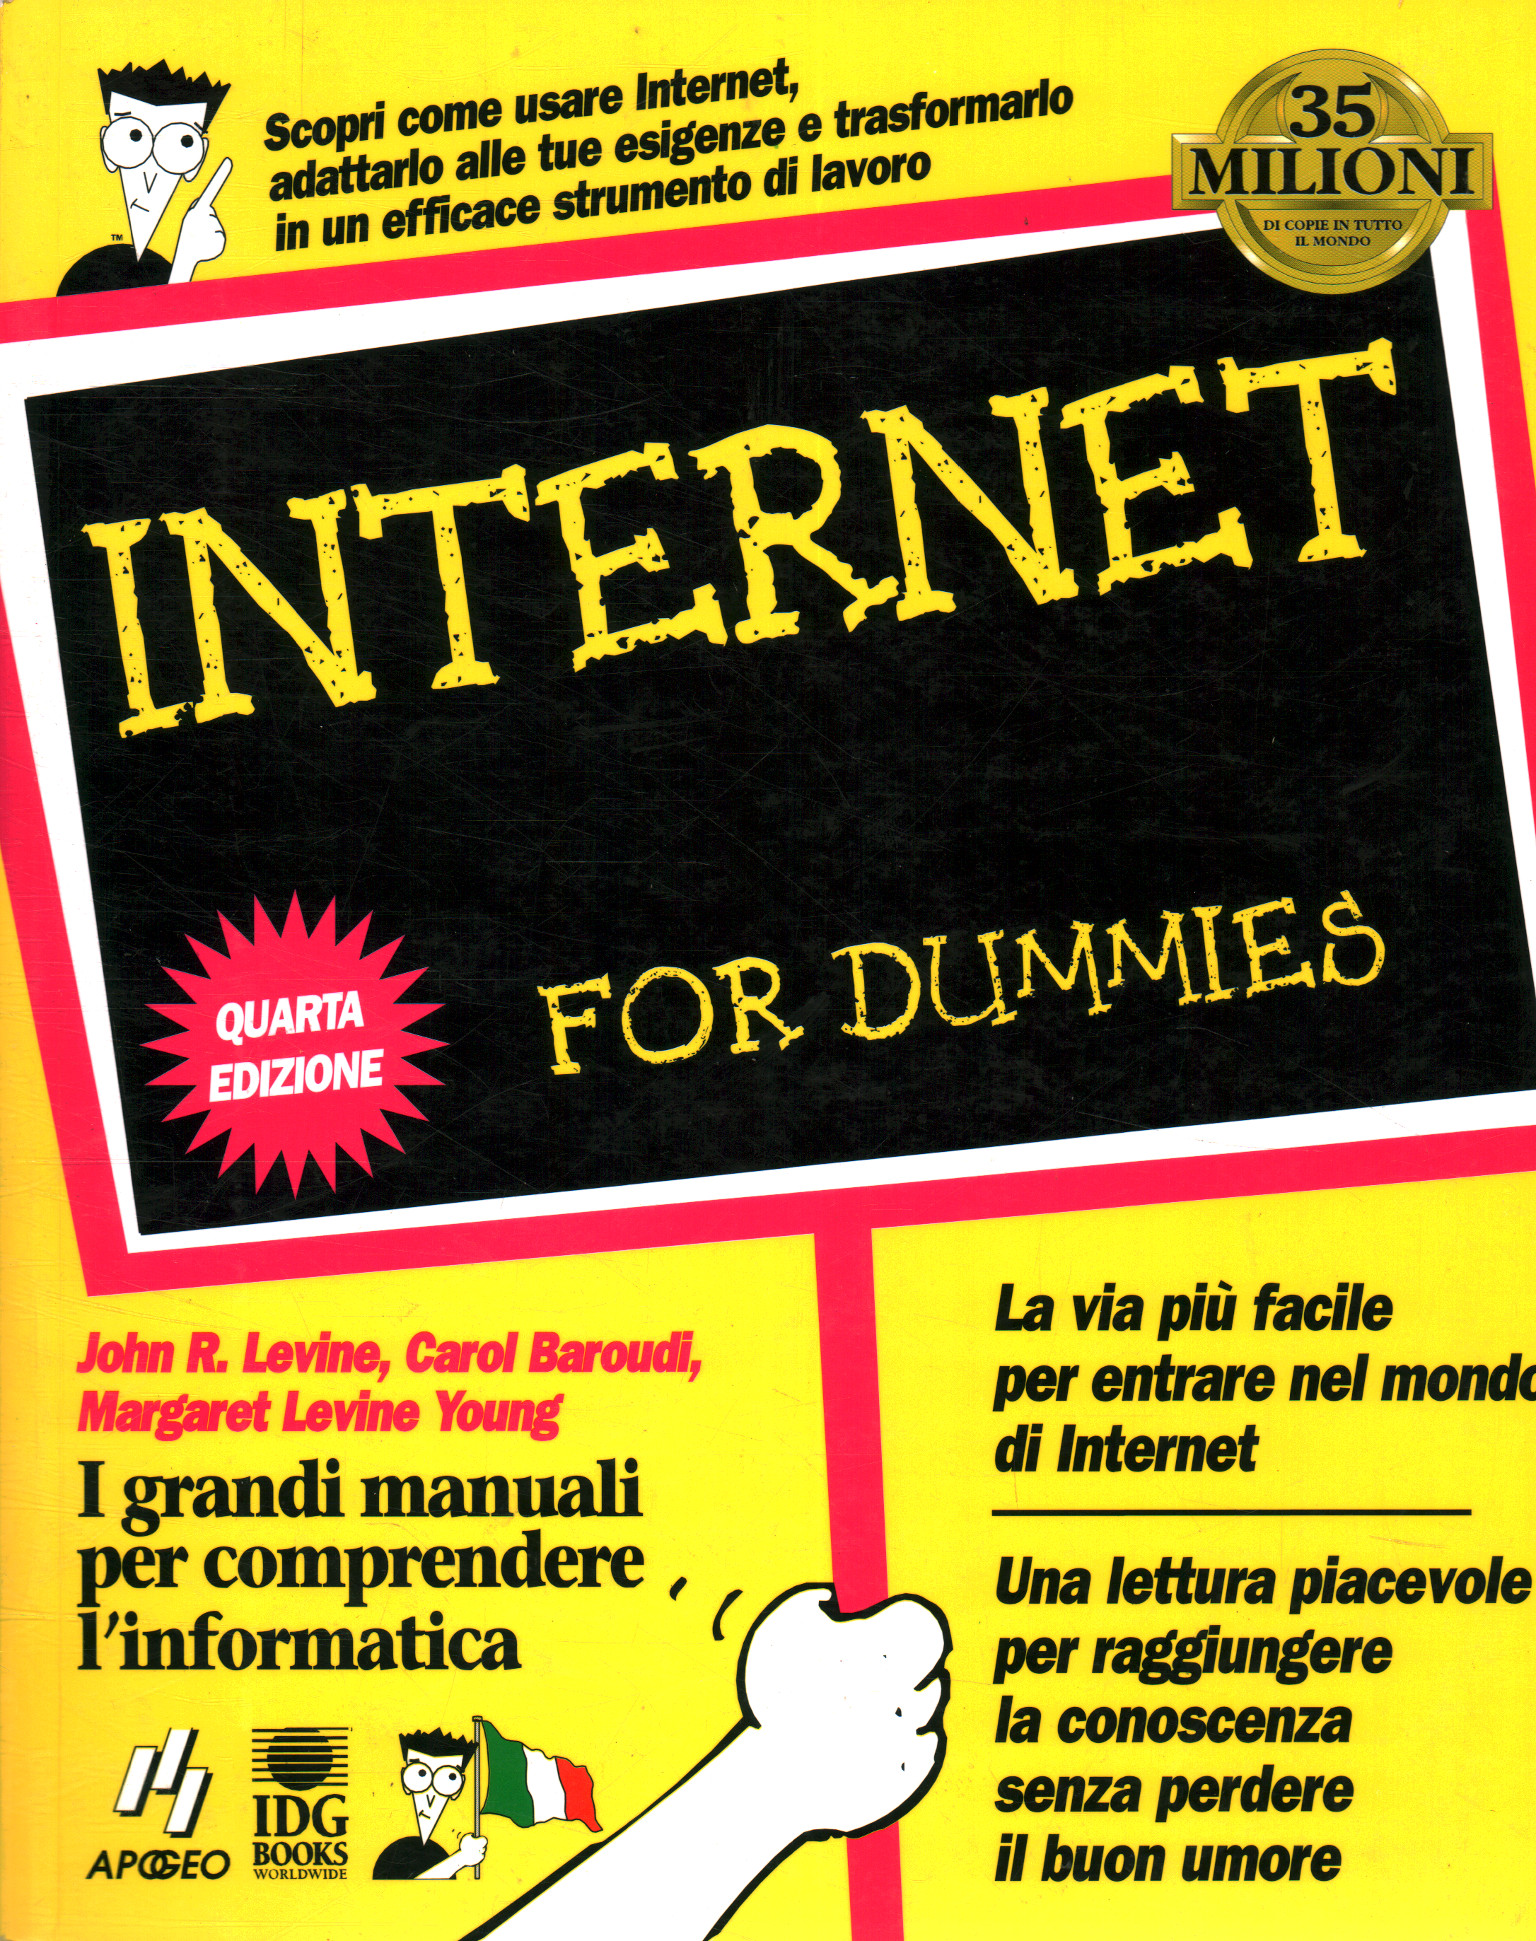 Internet for dummies, John R. levine Carol Baroudi Margaret Levine Young